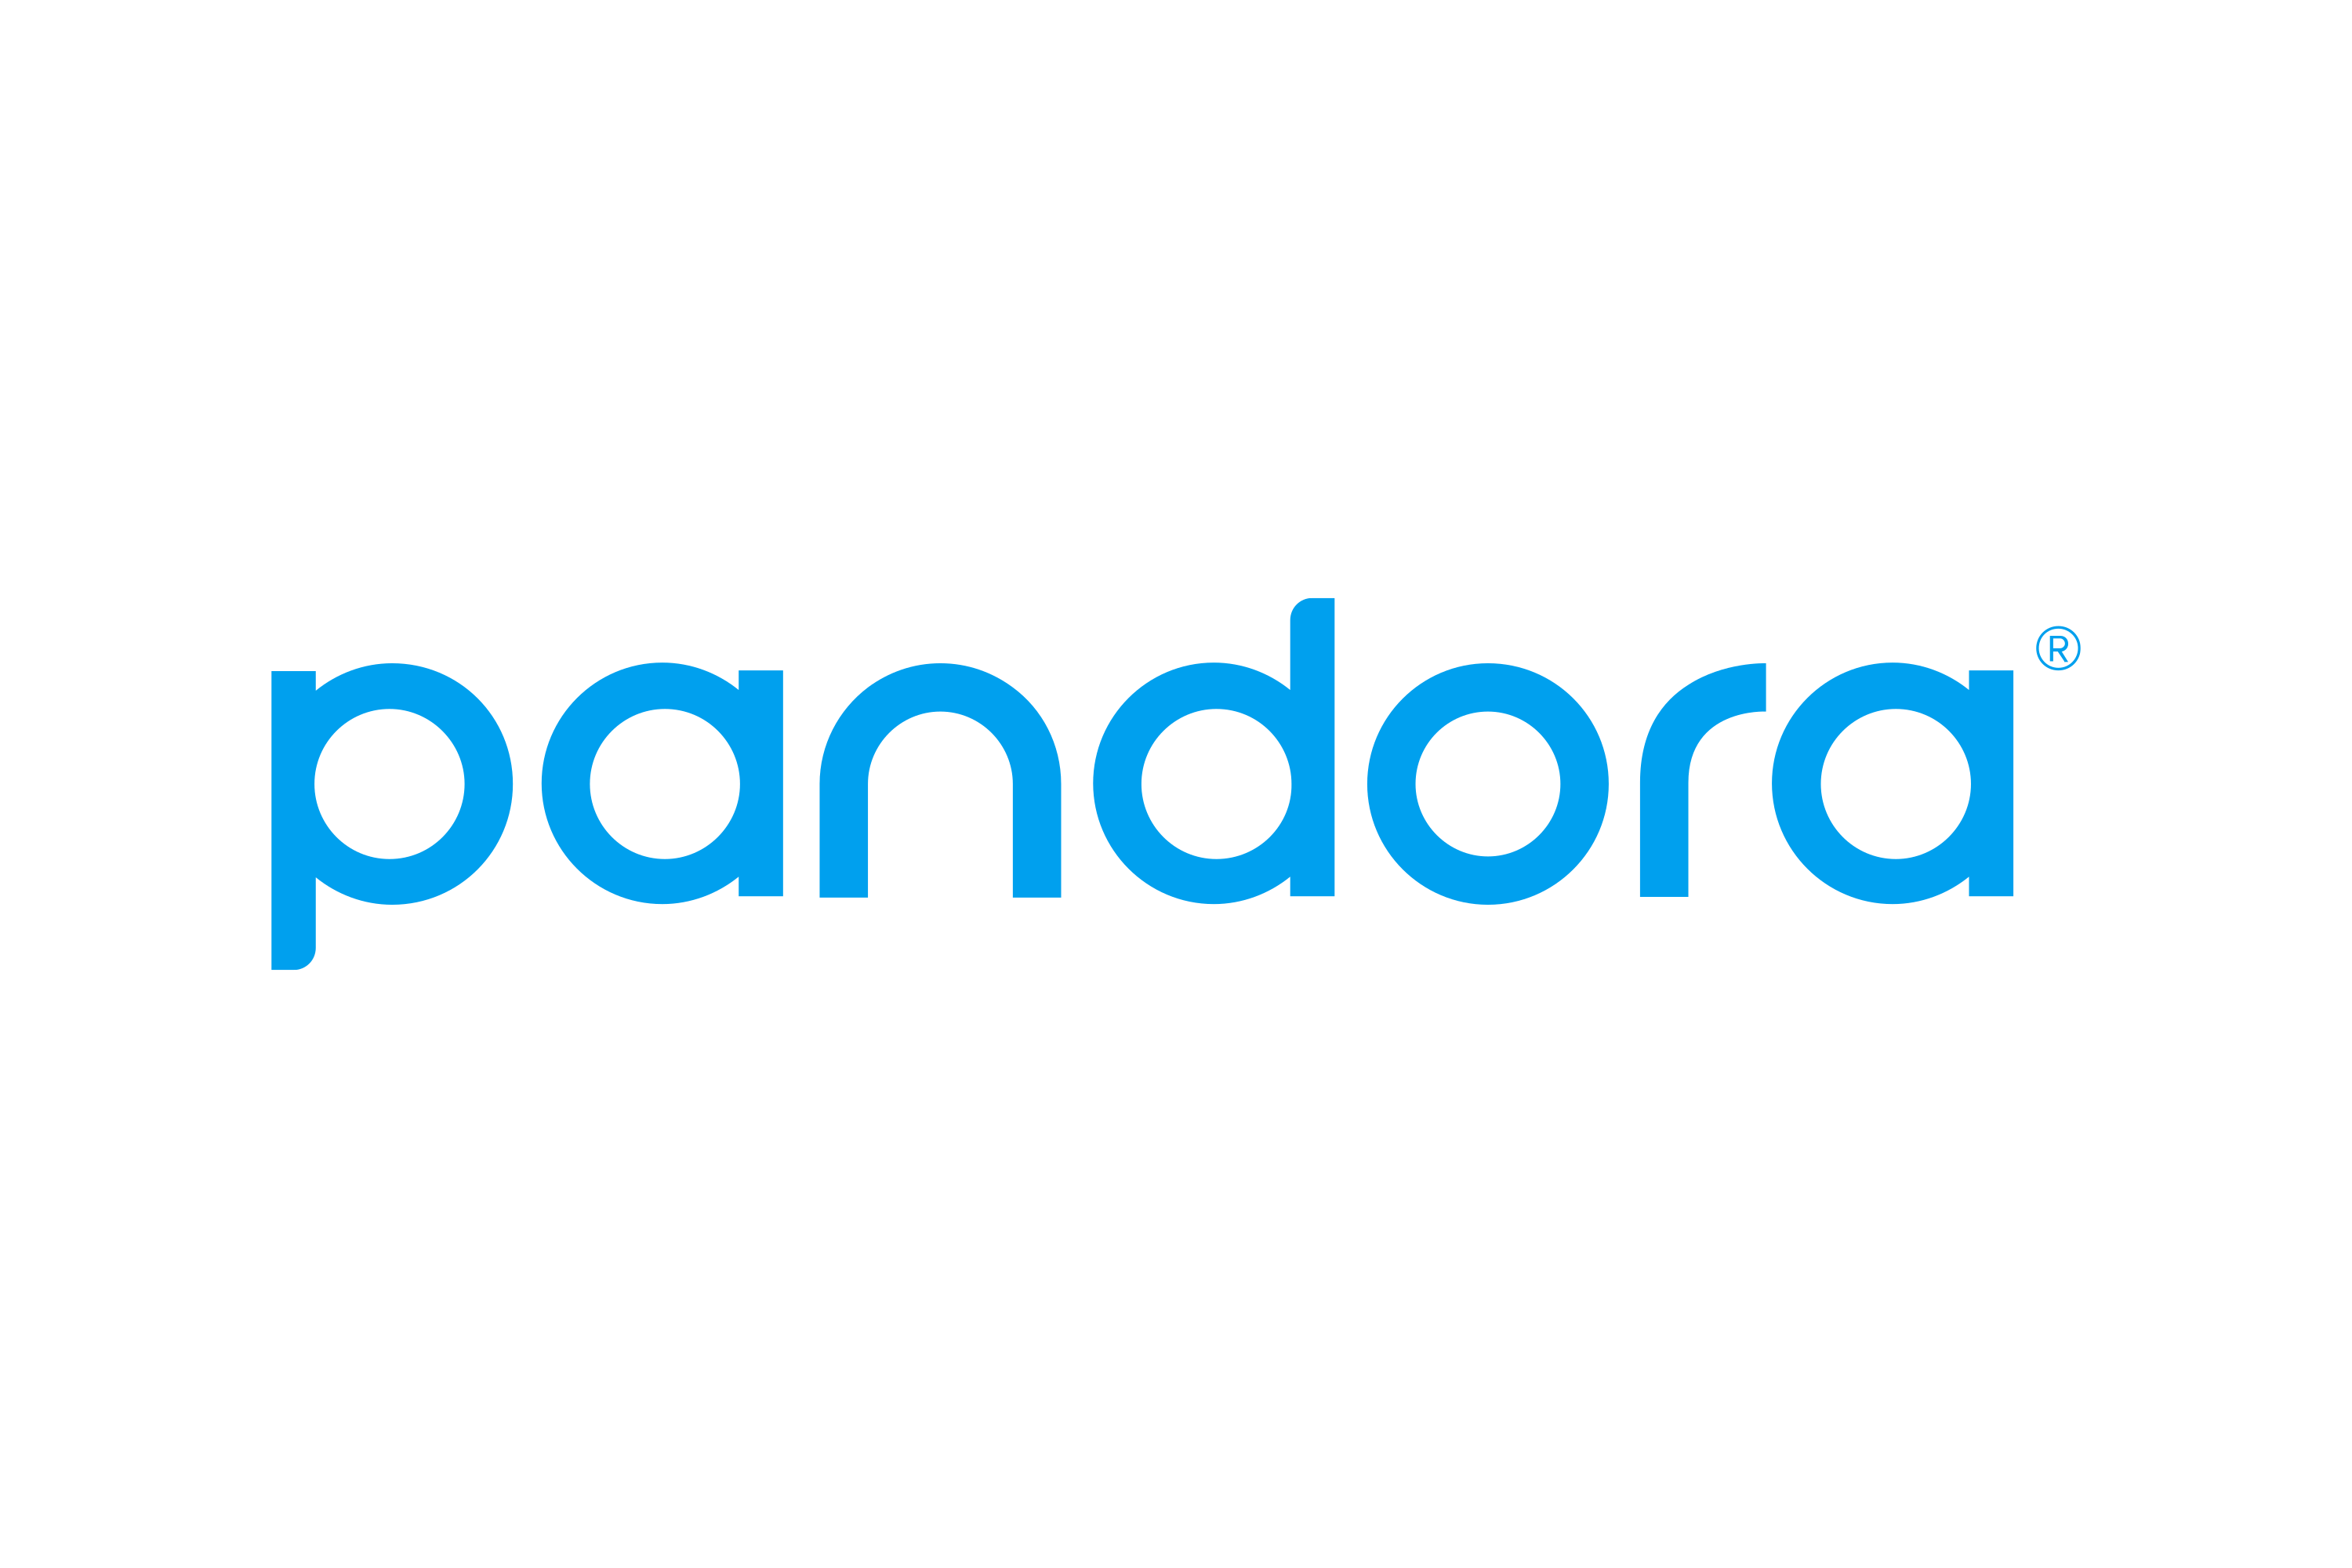 Download Pandora Radio Logo in SVG Vector or PNG File Format - Logo.wine